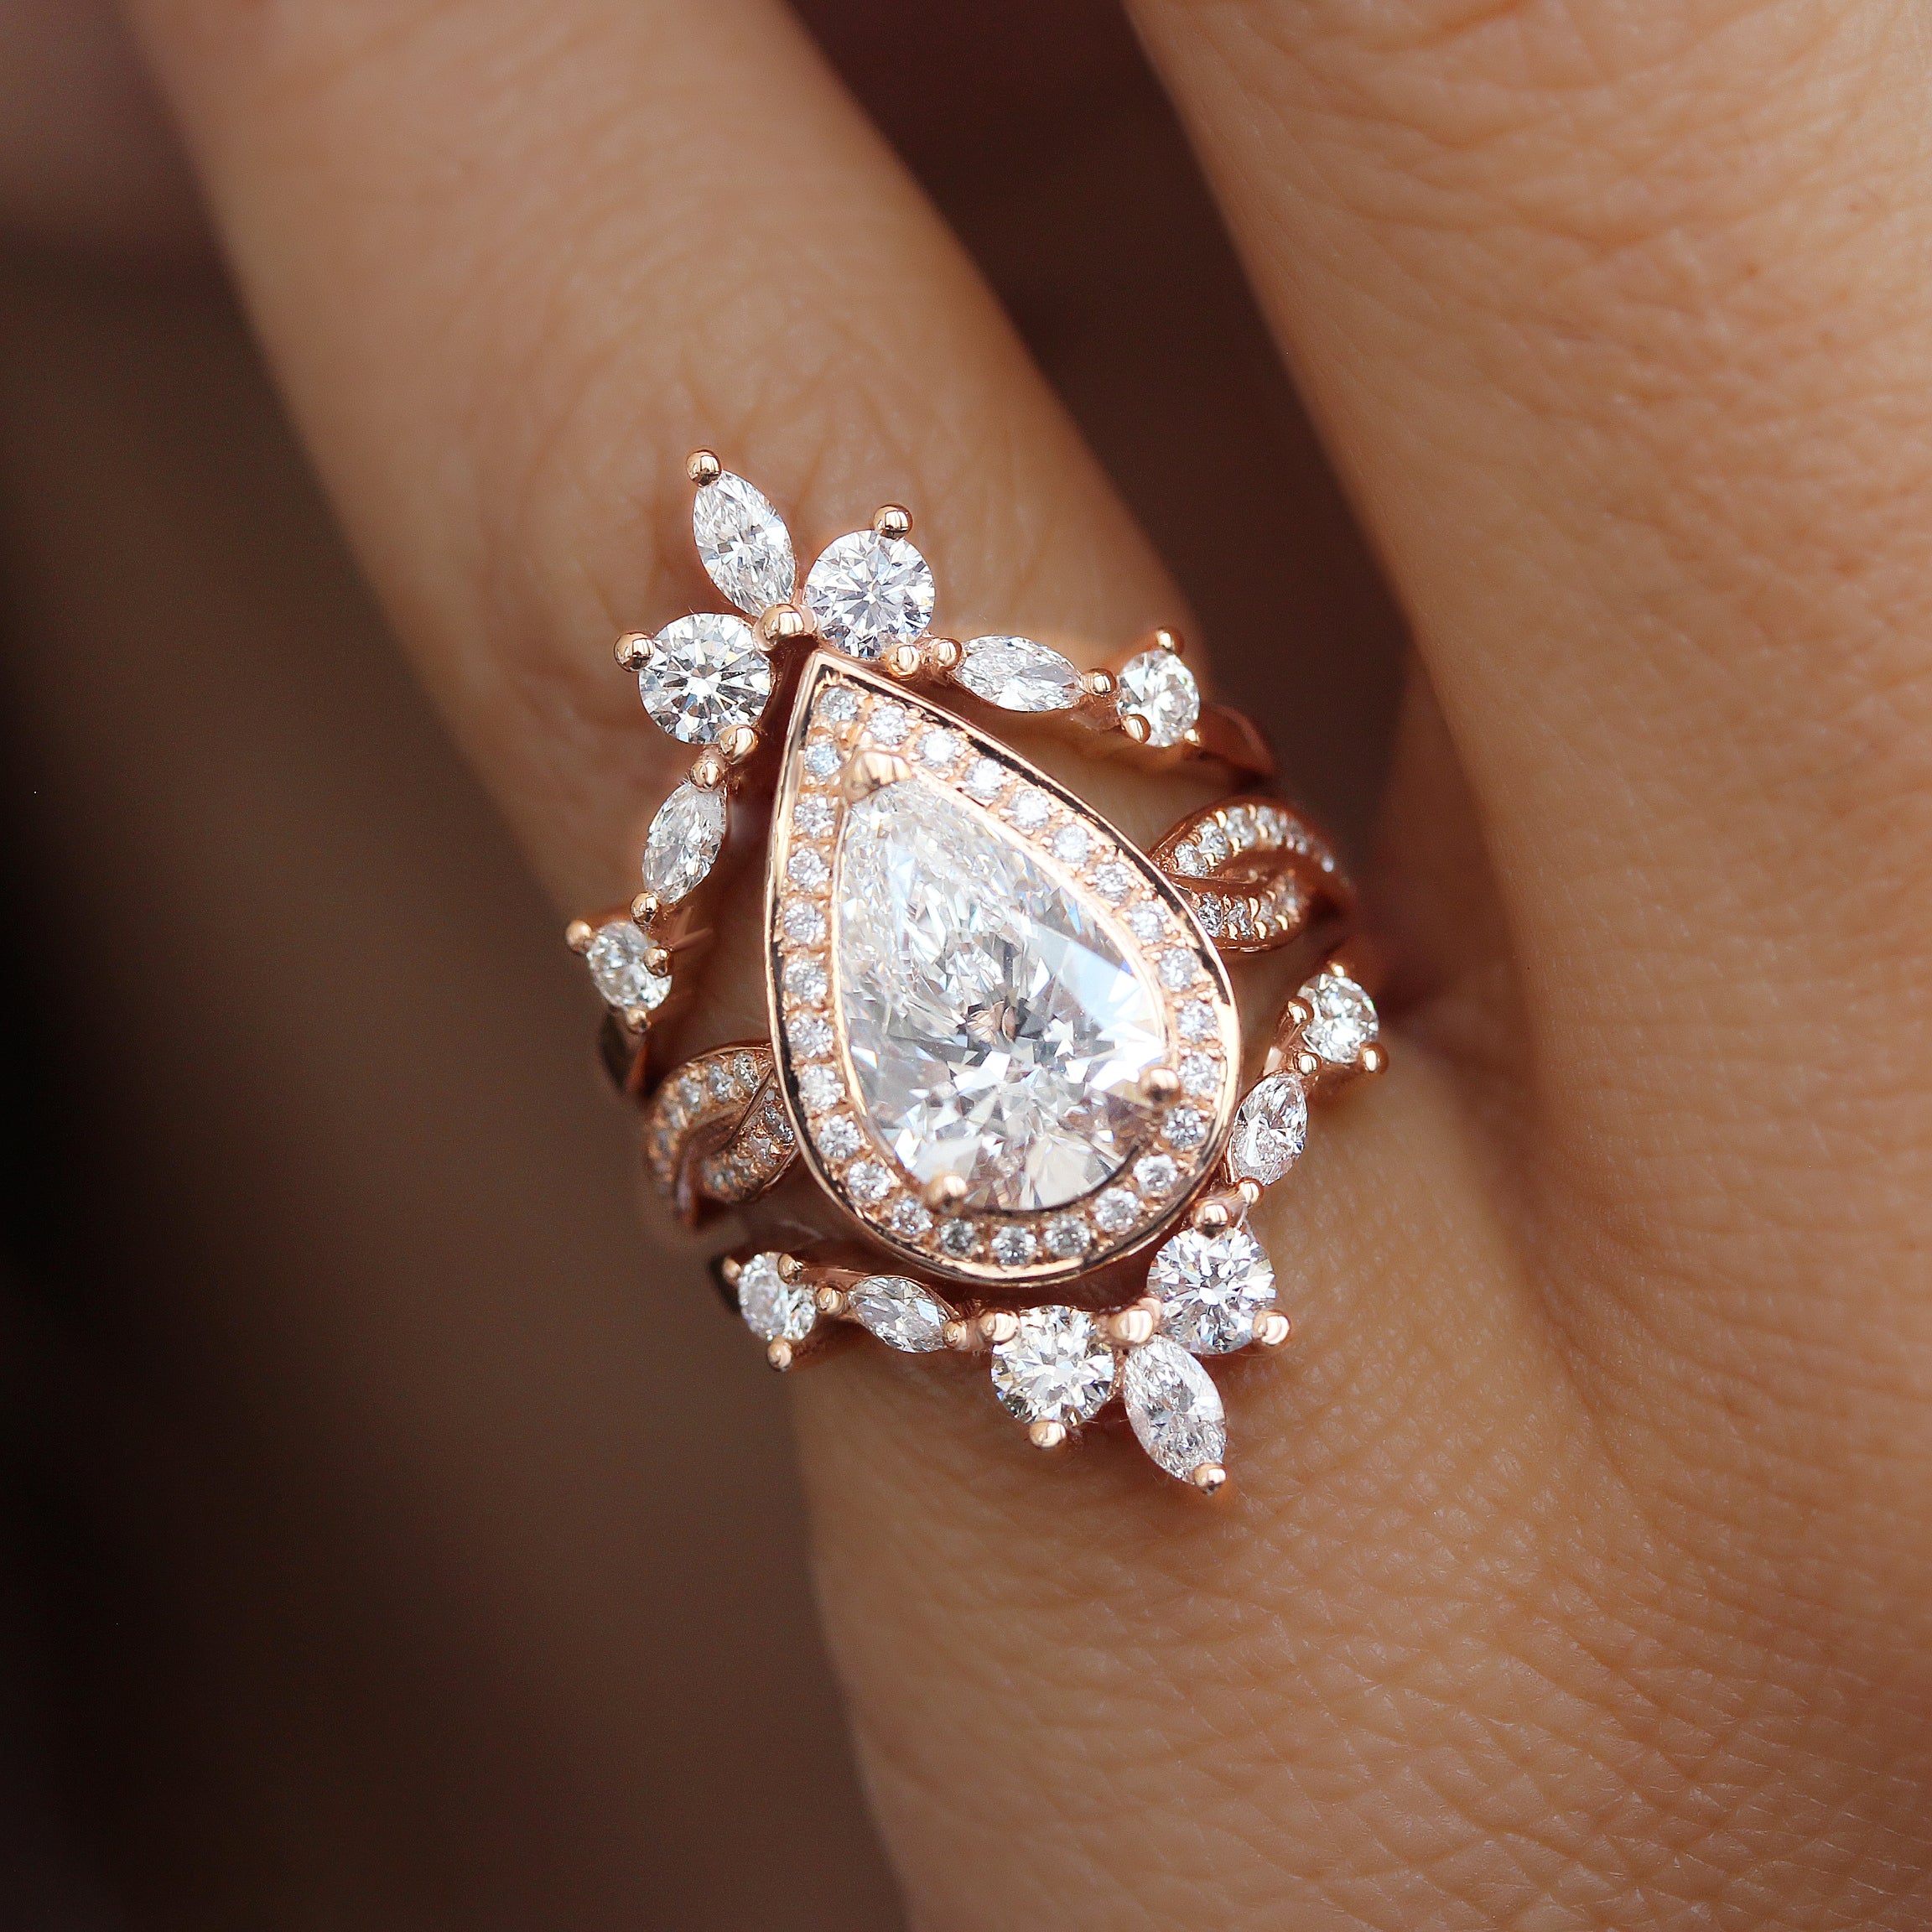 2 carat Pear diamond engagement ring - "Zeus" ♥